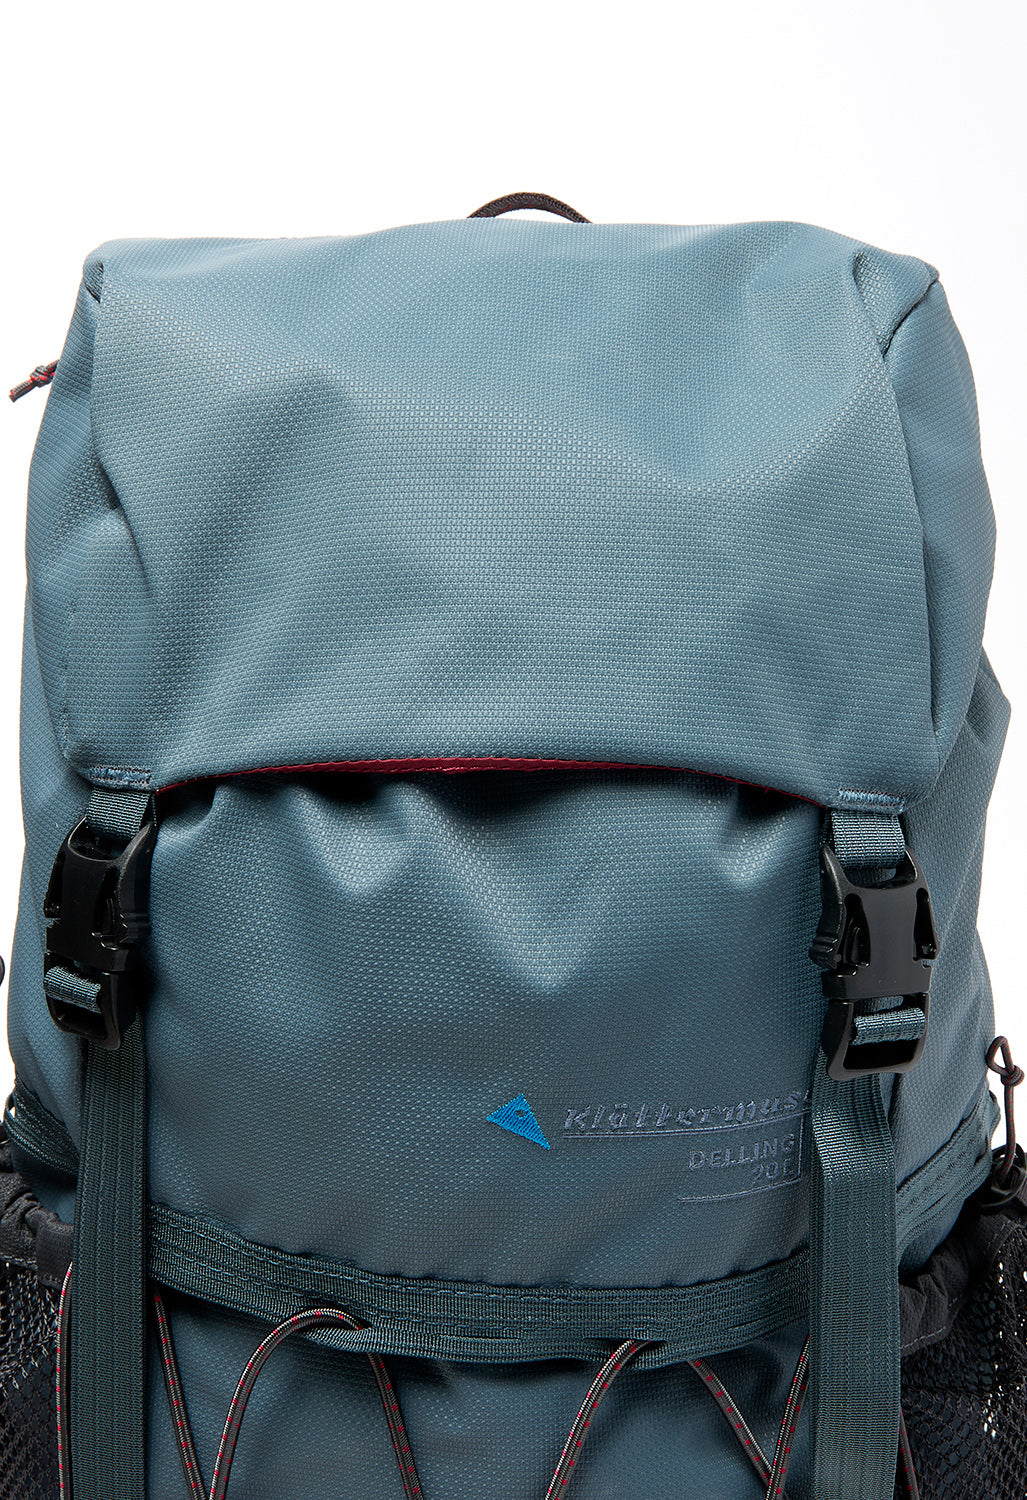 Klattermusen Delling Backpack 20L - Thistle Blue